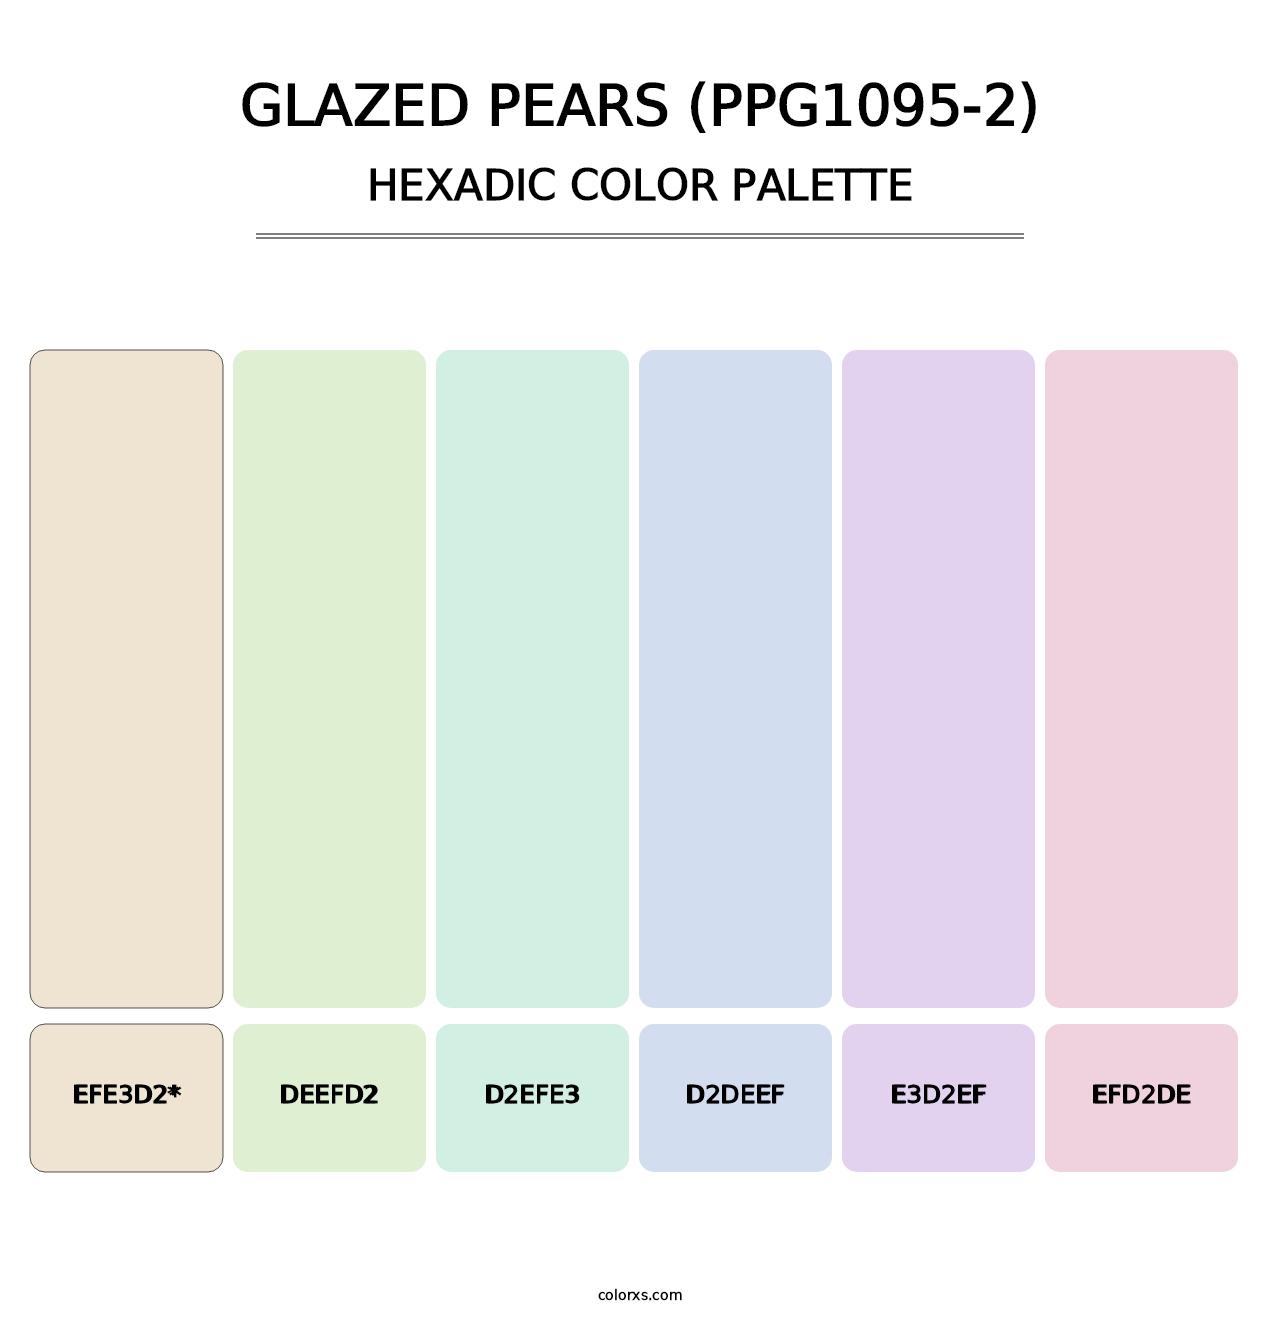 Glazed Pears (PPG1095-2) - Hexadic Color Palette